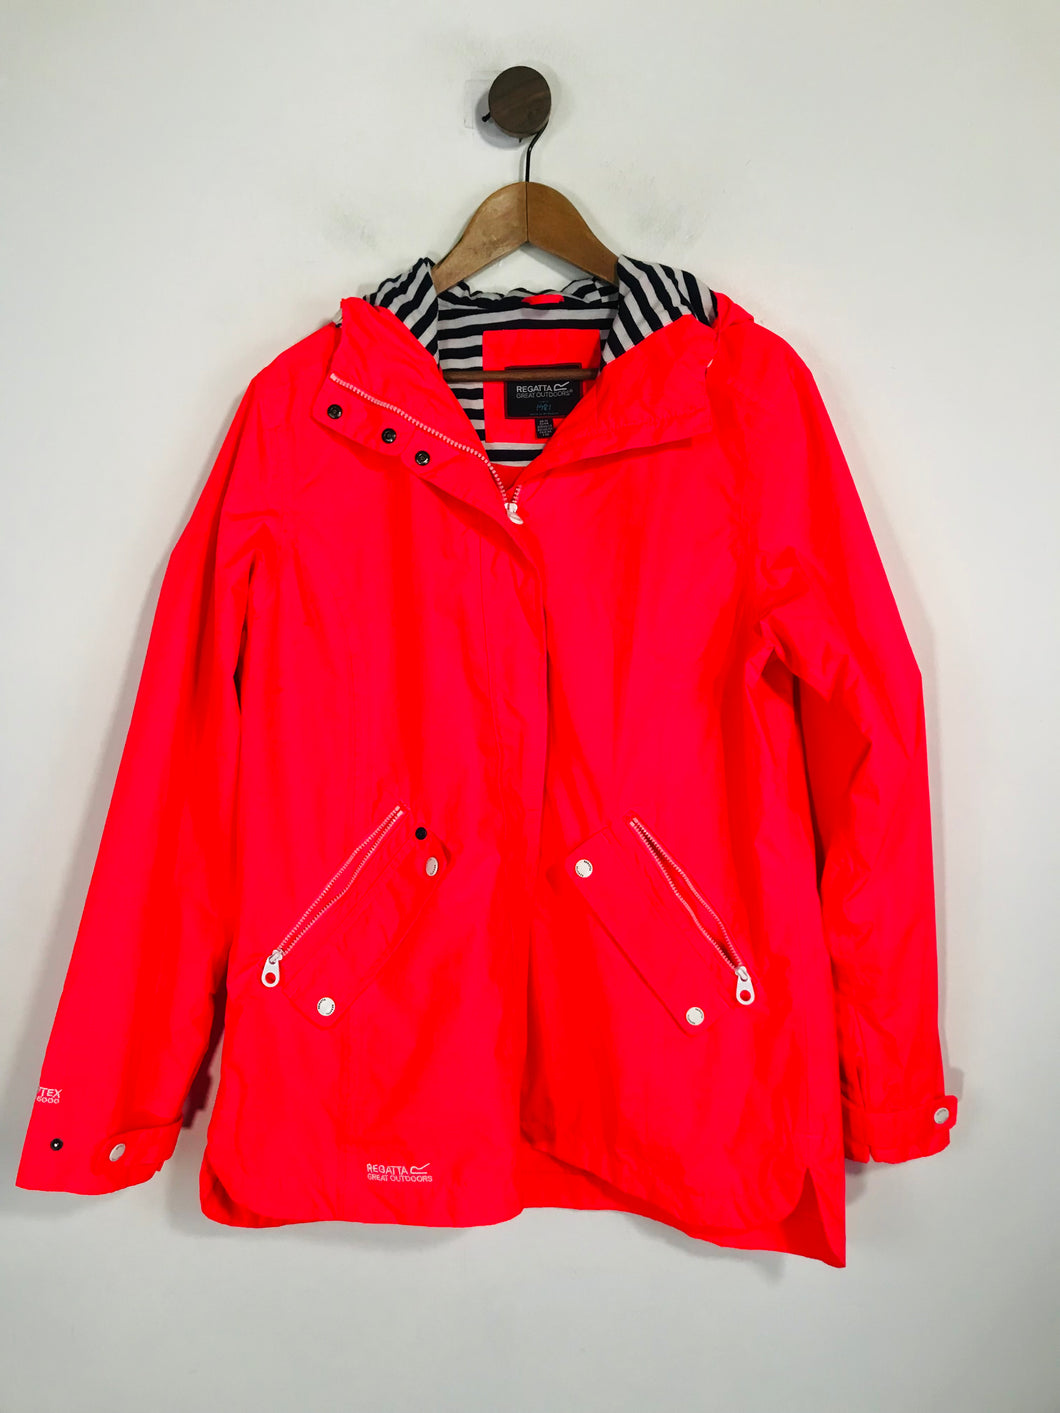 Regatta Women's Zip Raincoat Jacket | UK18 | Pink